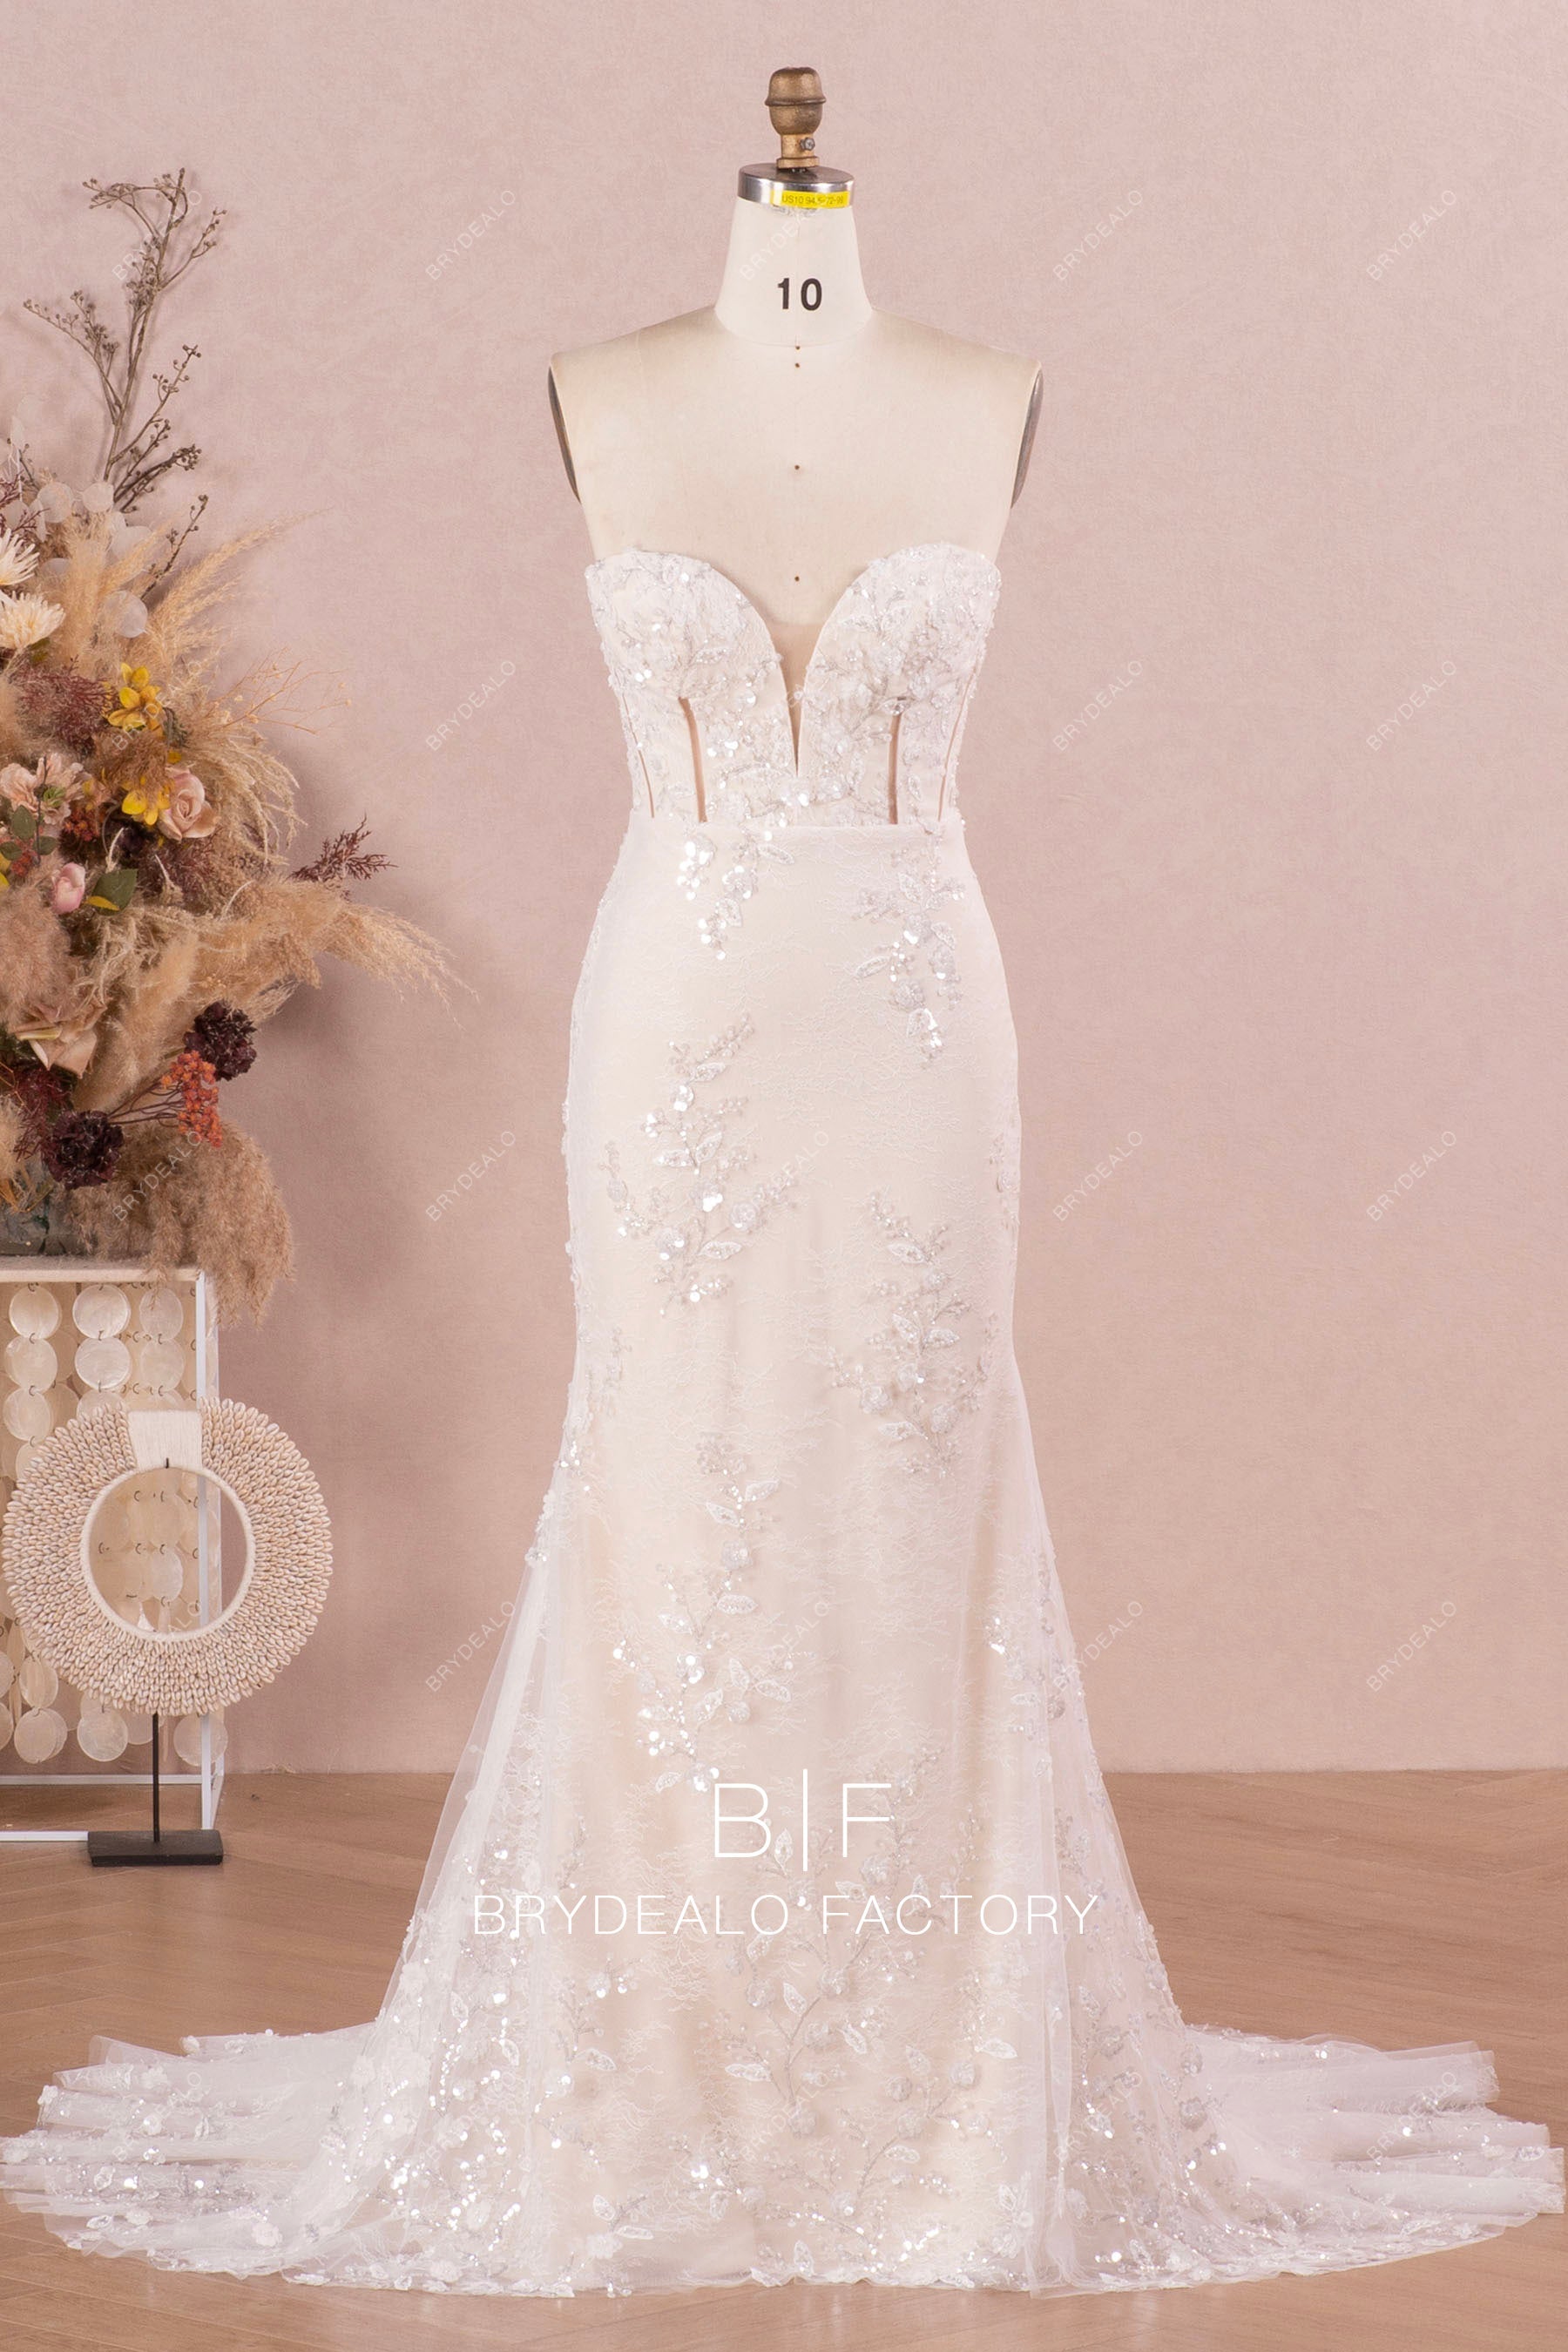 Designer Lace Strapless Champagne Mermaid Wedding Dress